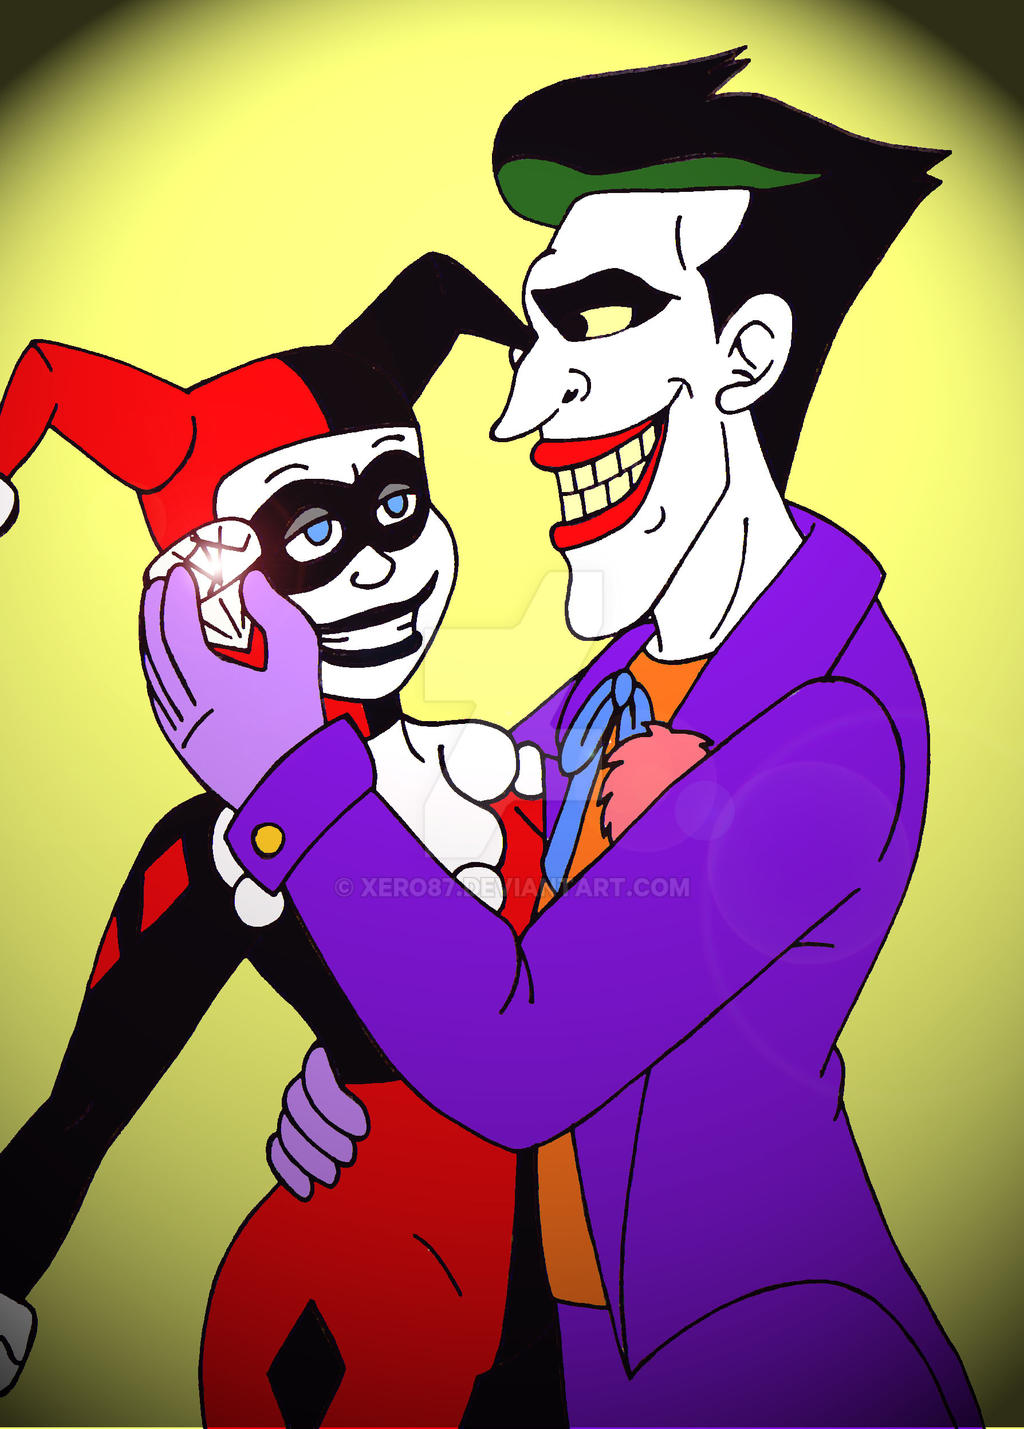 Joker and Harley: Like a Diamond by xero87 on DeviantArt